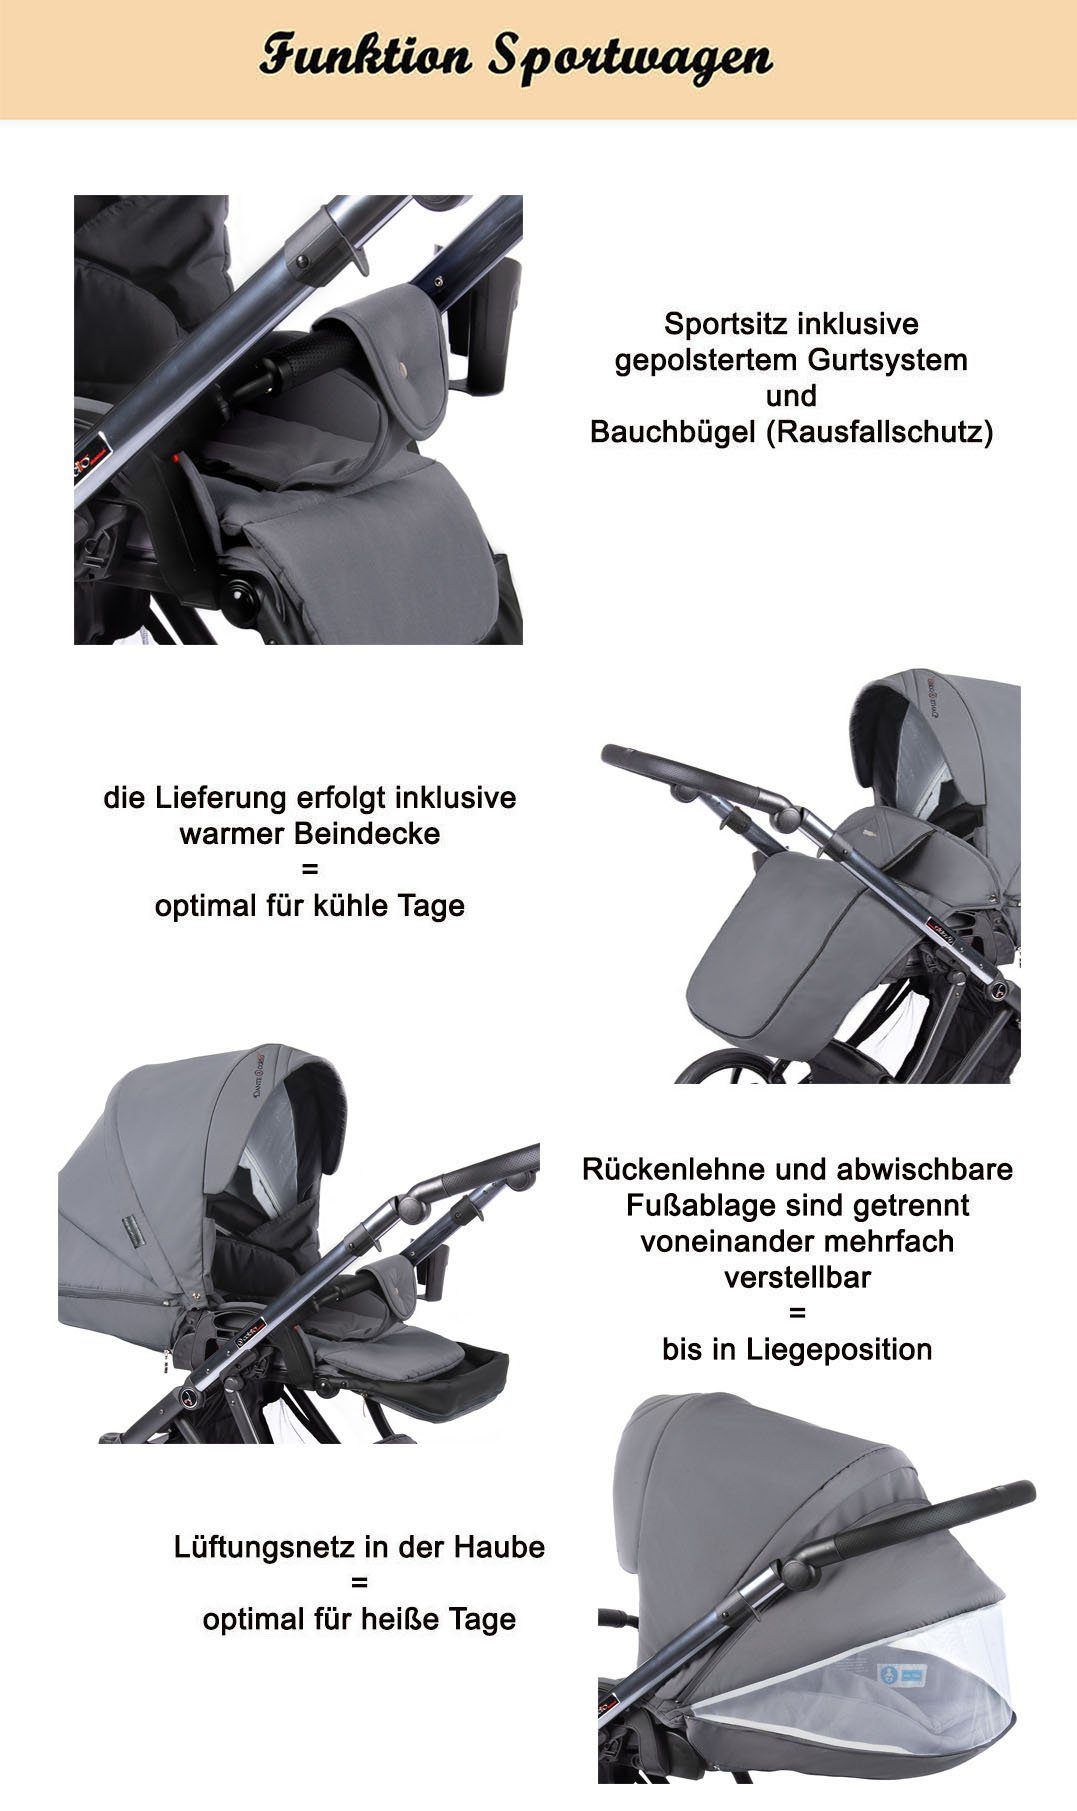 babies-on-wheels Kombi-Kinderwagen 2 in 16 Farben - in - Dante 1 Teile Kinderwagen-Set 11 kupfer = Türkis Gestell